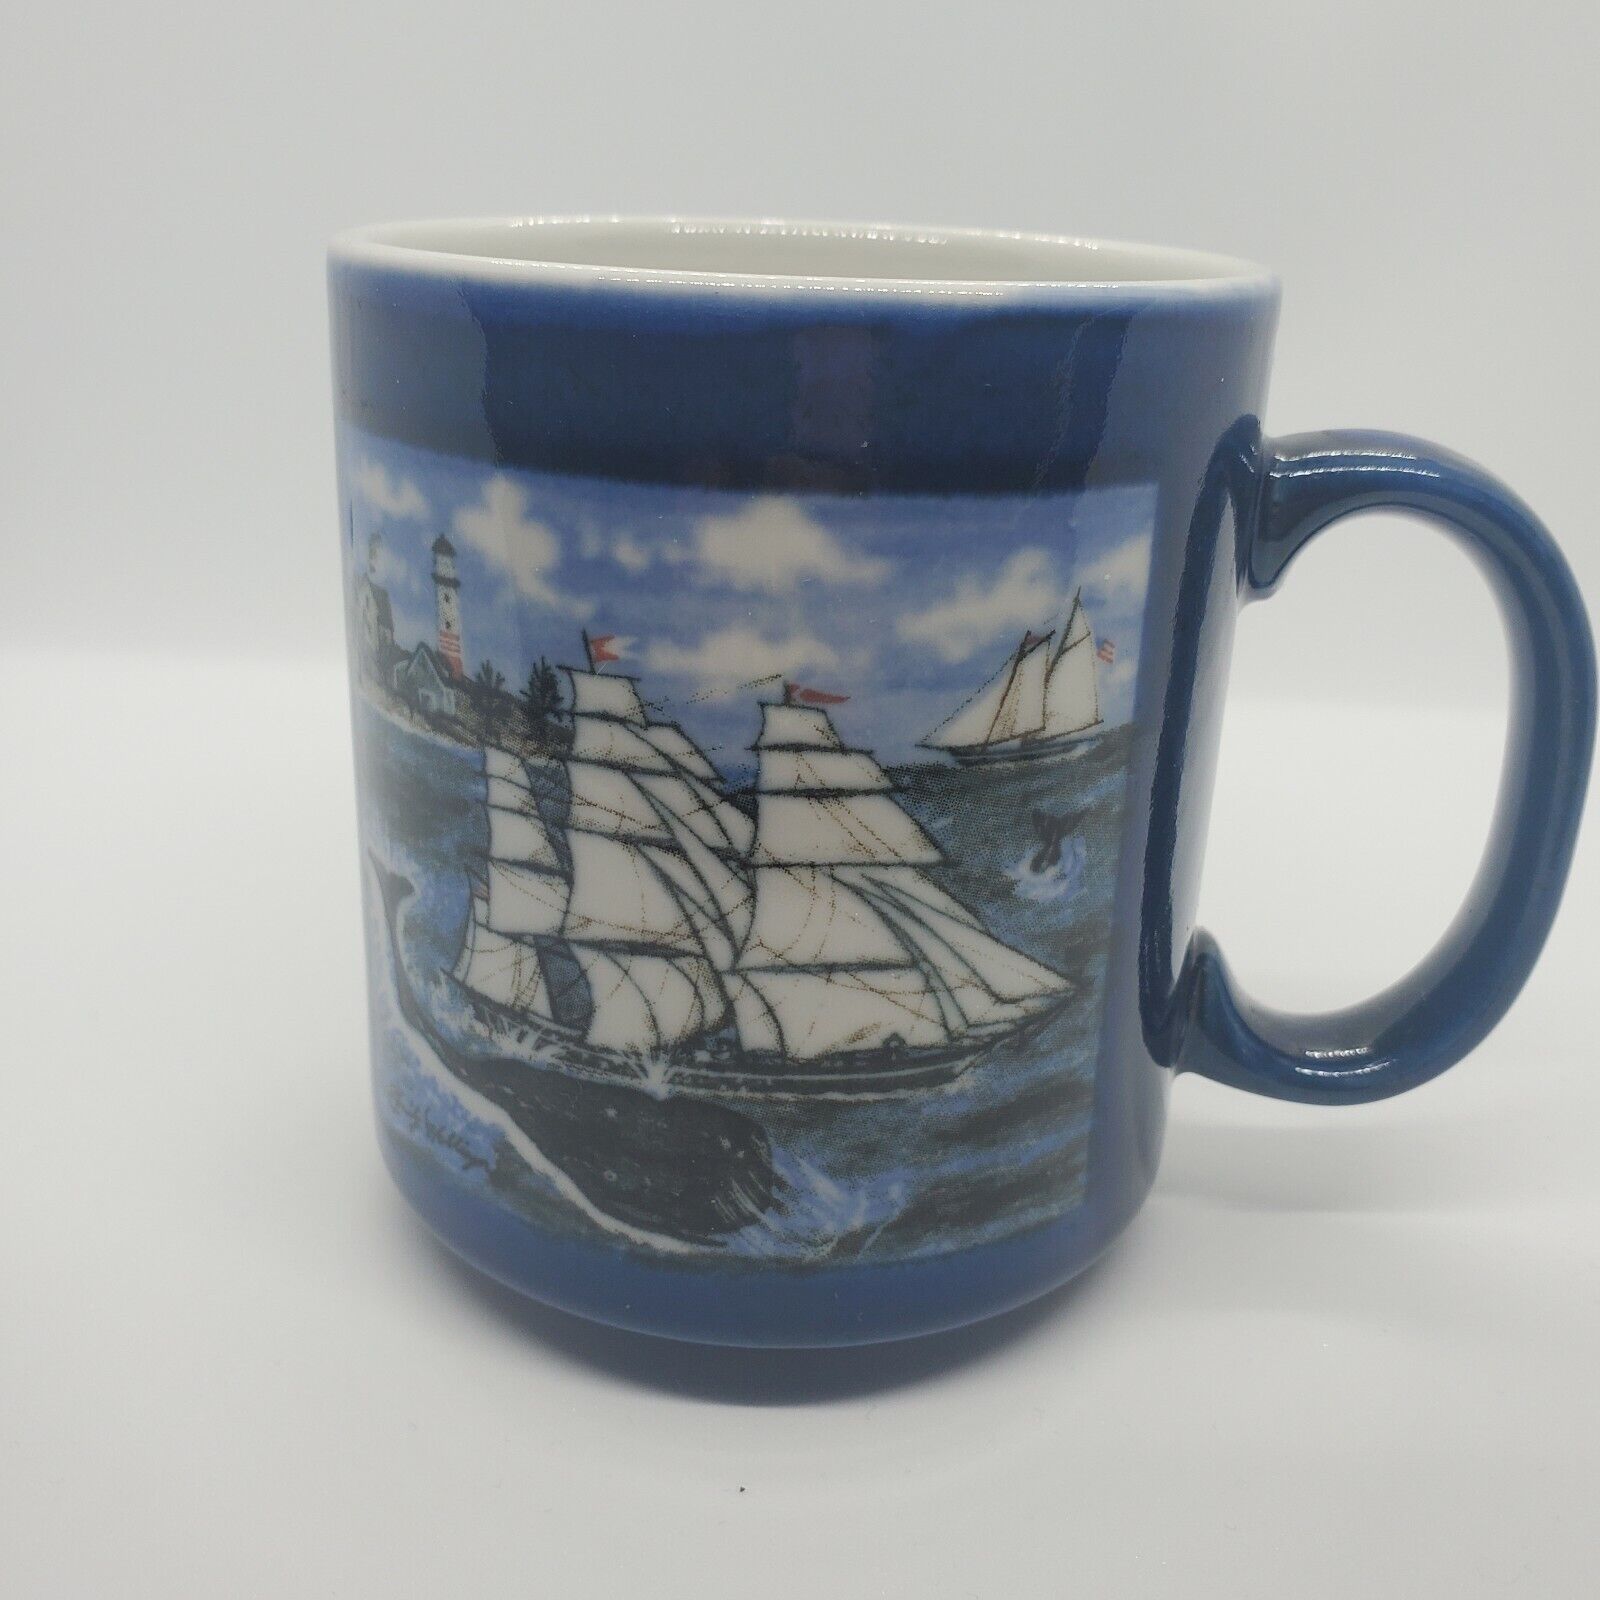 Otagiri Japan Emily Hollinger Coffee/Tea Mug Blue Whale Sailing Ship Nautical